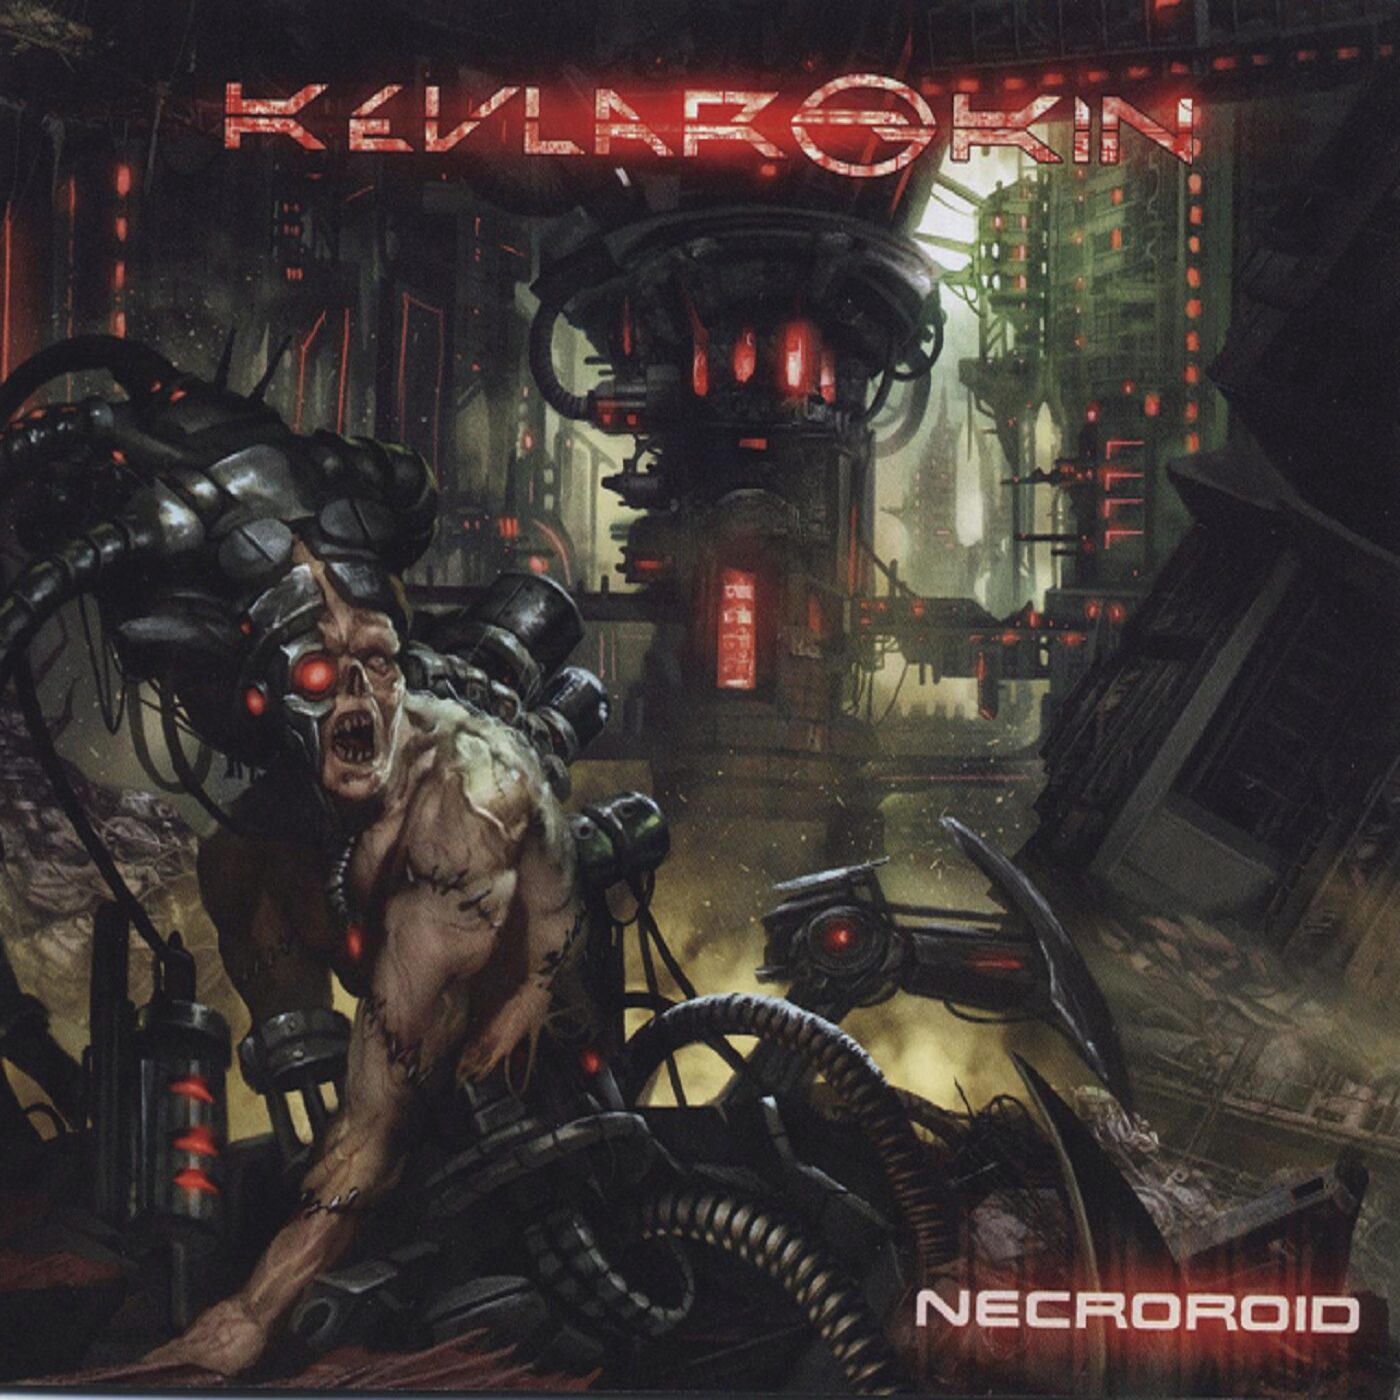 Kevlar Skin - Necroroid | CDN Records Shop